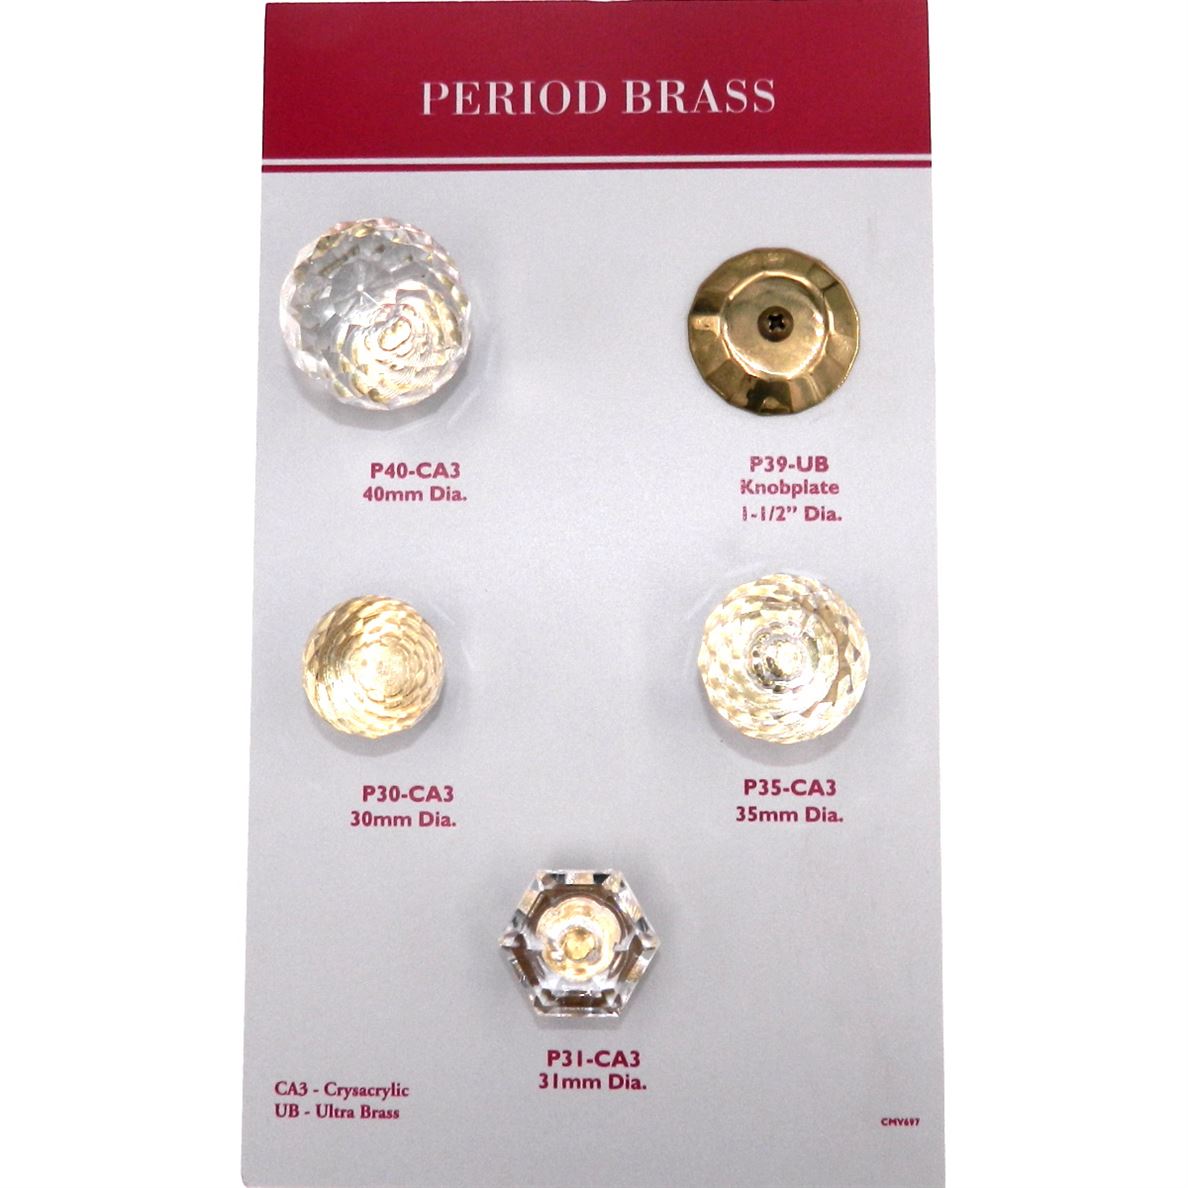 Belwith Crystal Palace Crysacrylic Polished Brass 1 3/8" Cabinet Knob P35-CA3